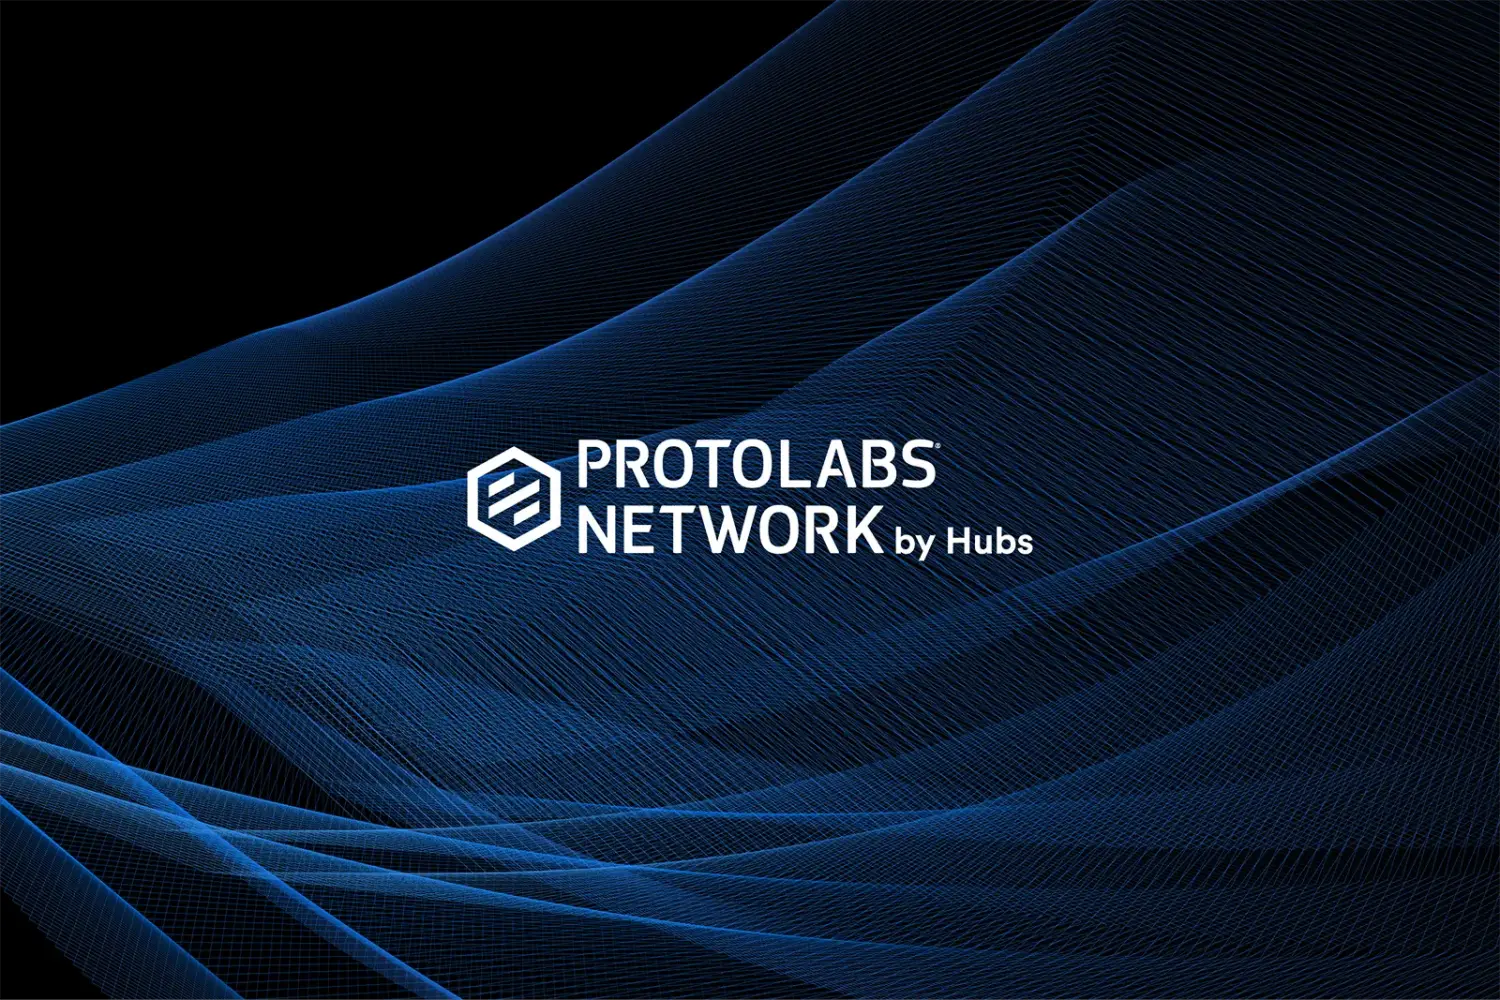 Protolabs Network customer campaign marketing image